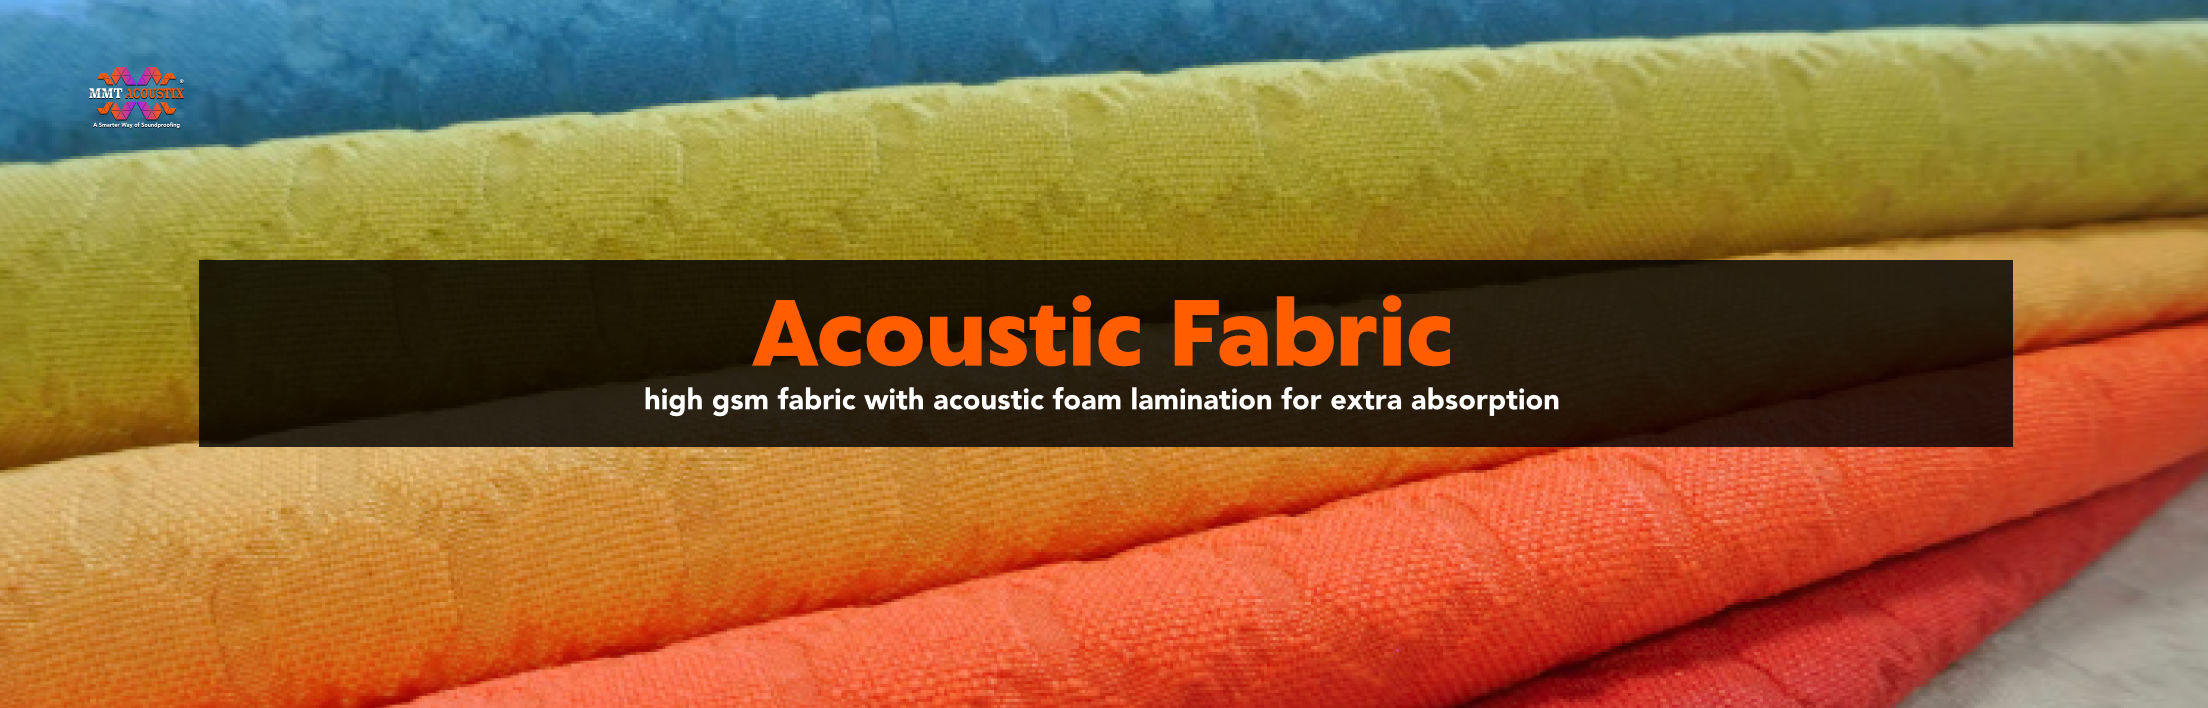 acoustic-fabric-panels